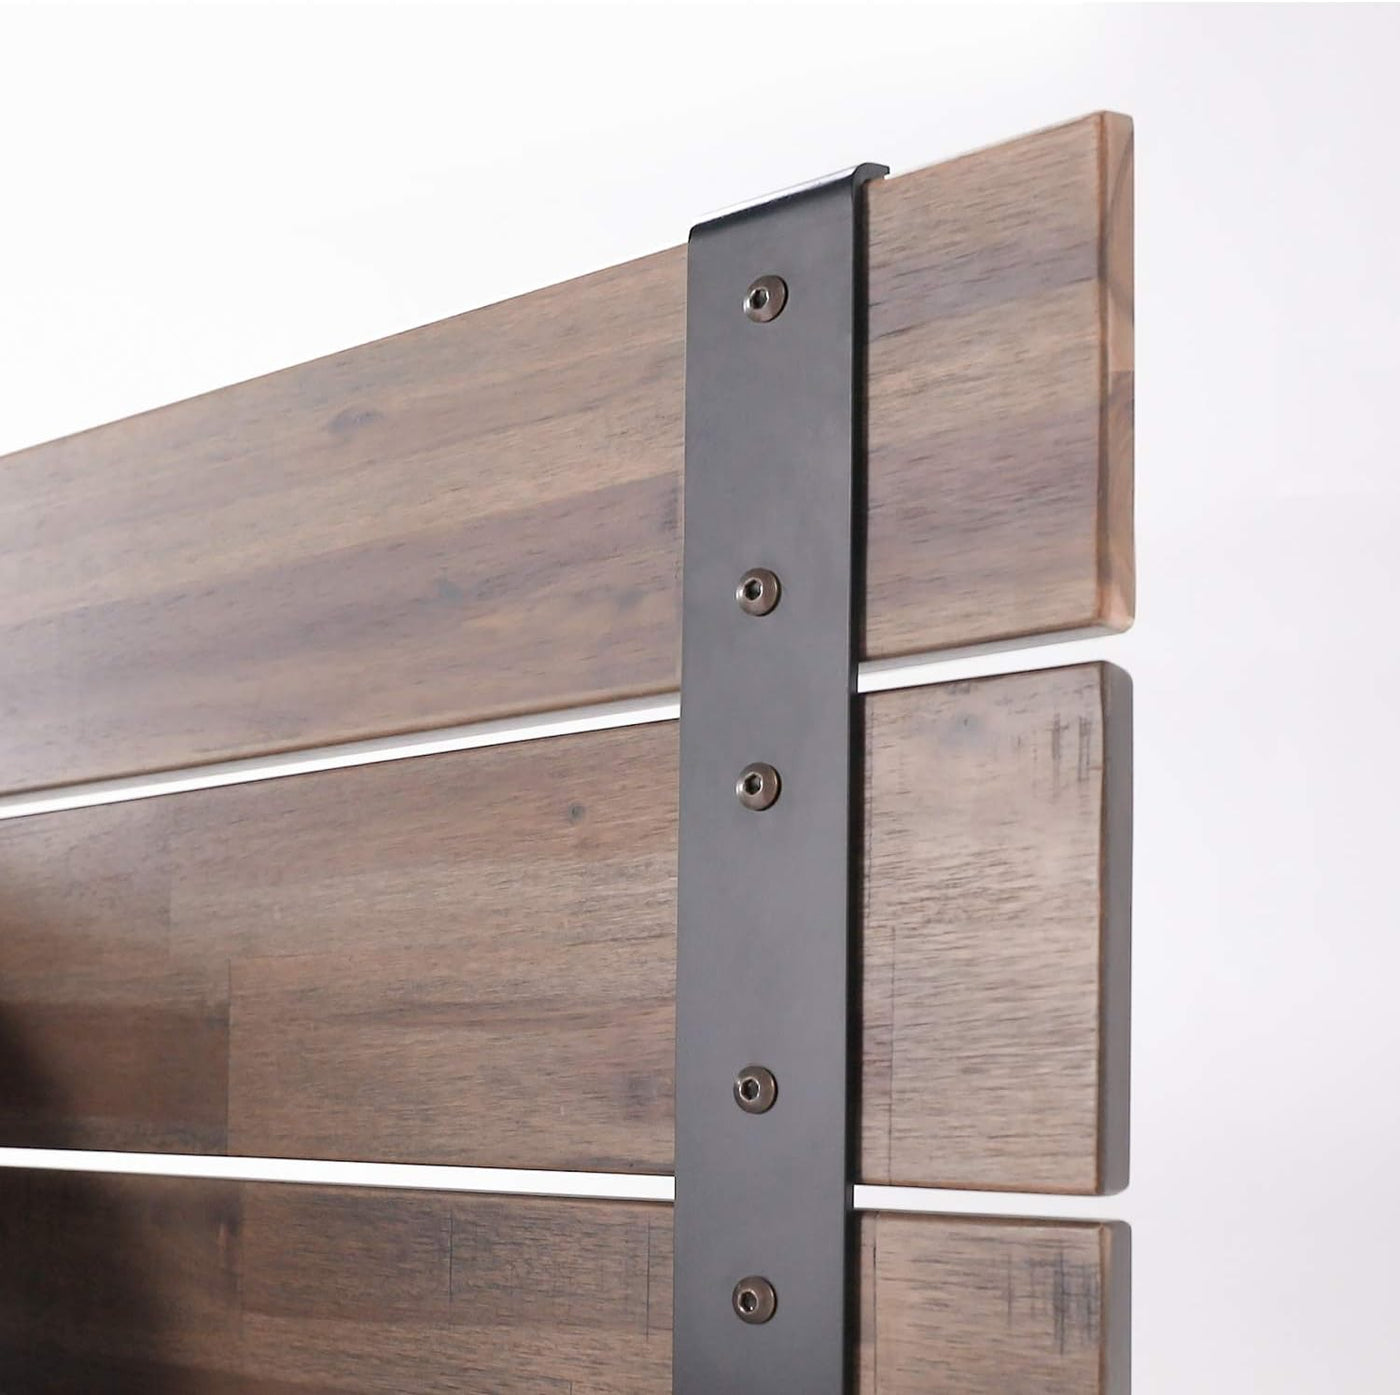 ZINUS Brock Metal and Wood Platform Bed Frame / Solid Acacia Wood, Twin - $230